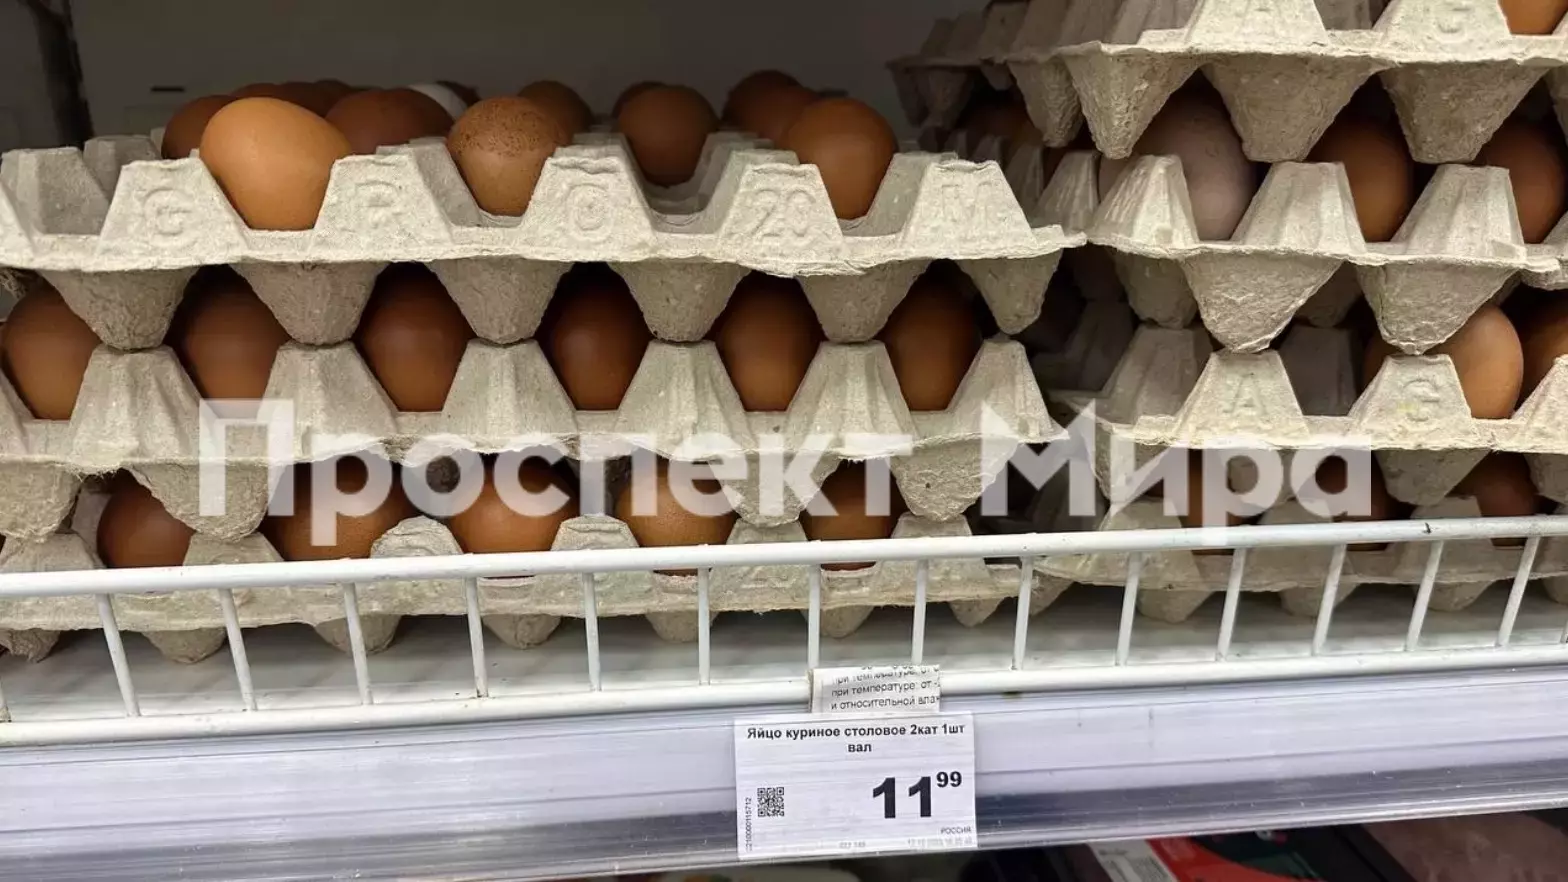 Красноярским магазинам не запрещают продажу яиц поштучно